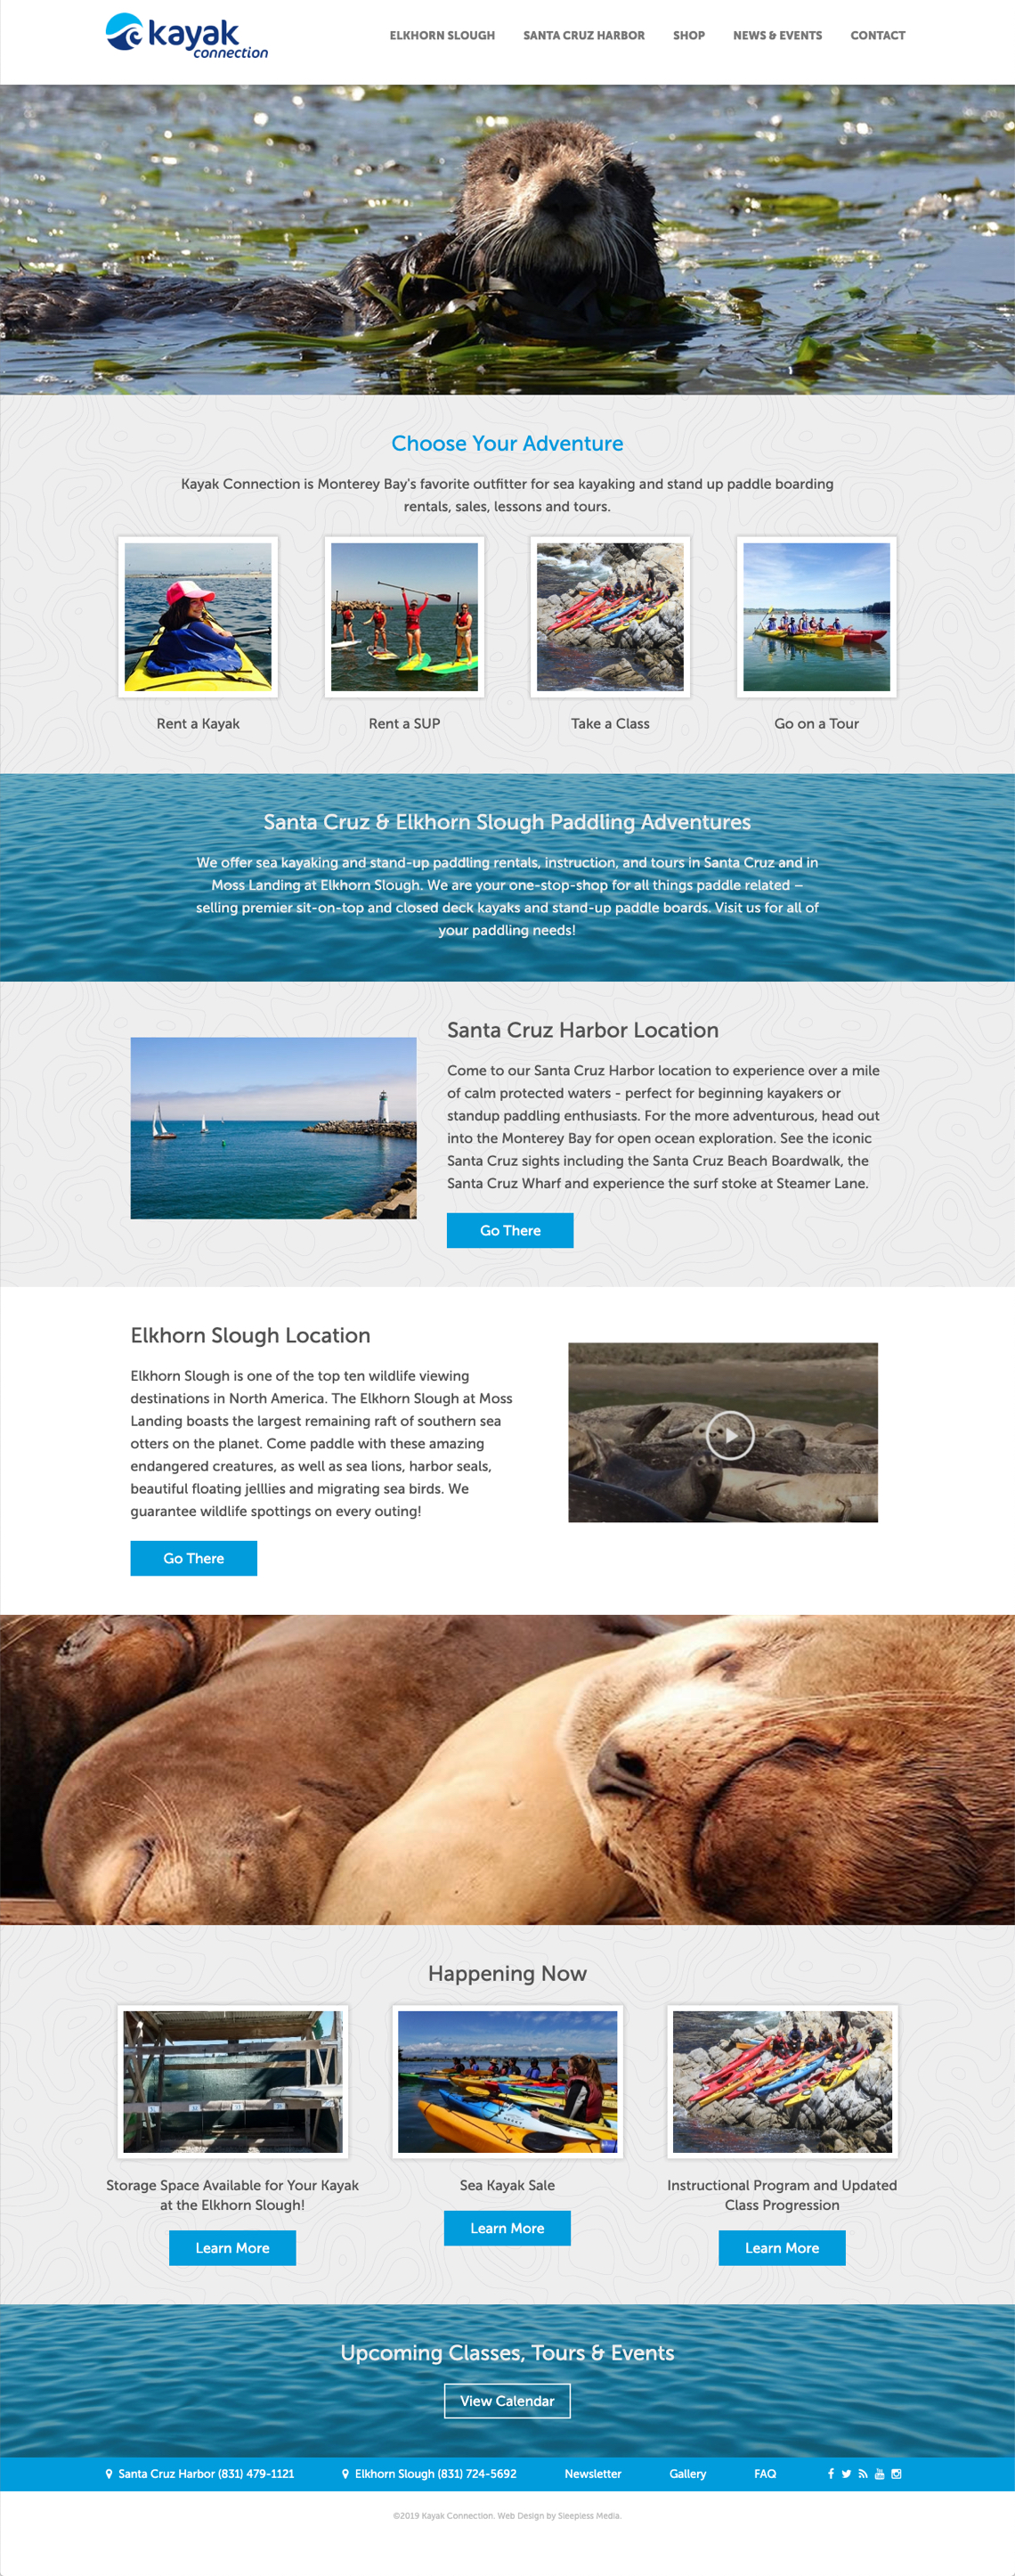 Kayak Connection Homepage